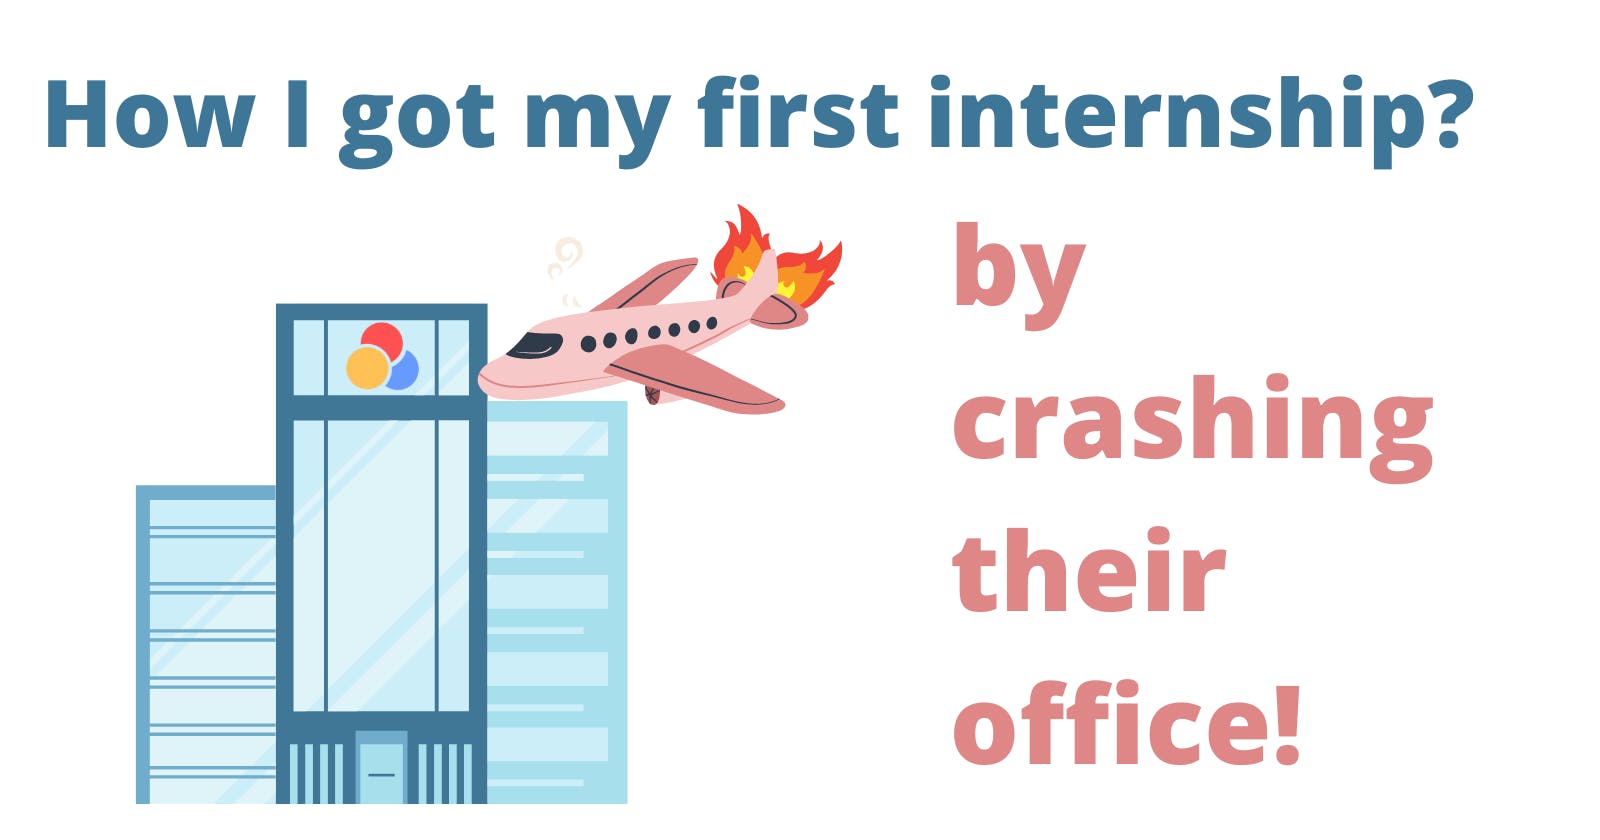 How I got my first internship by crashing their office!